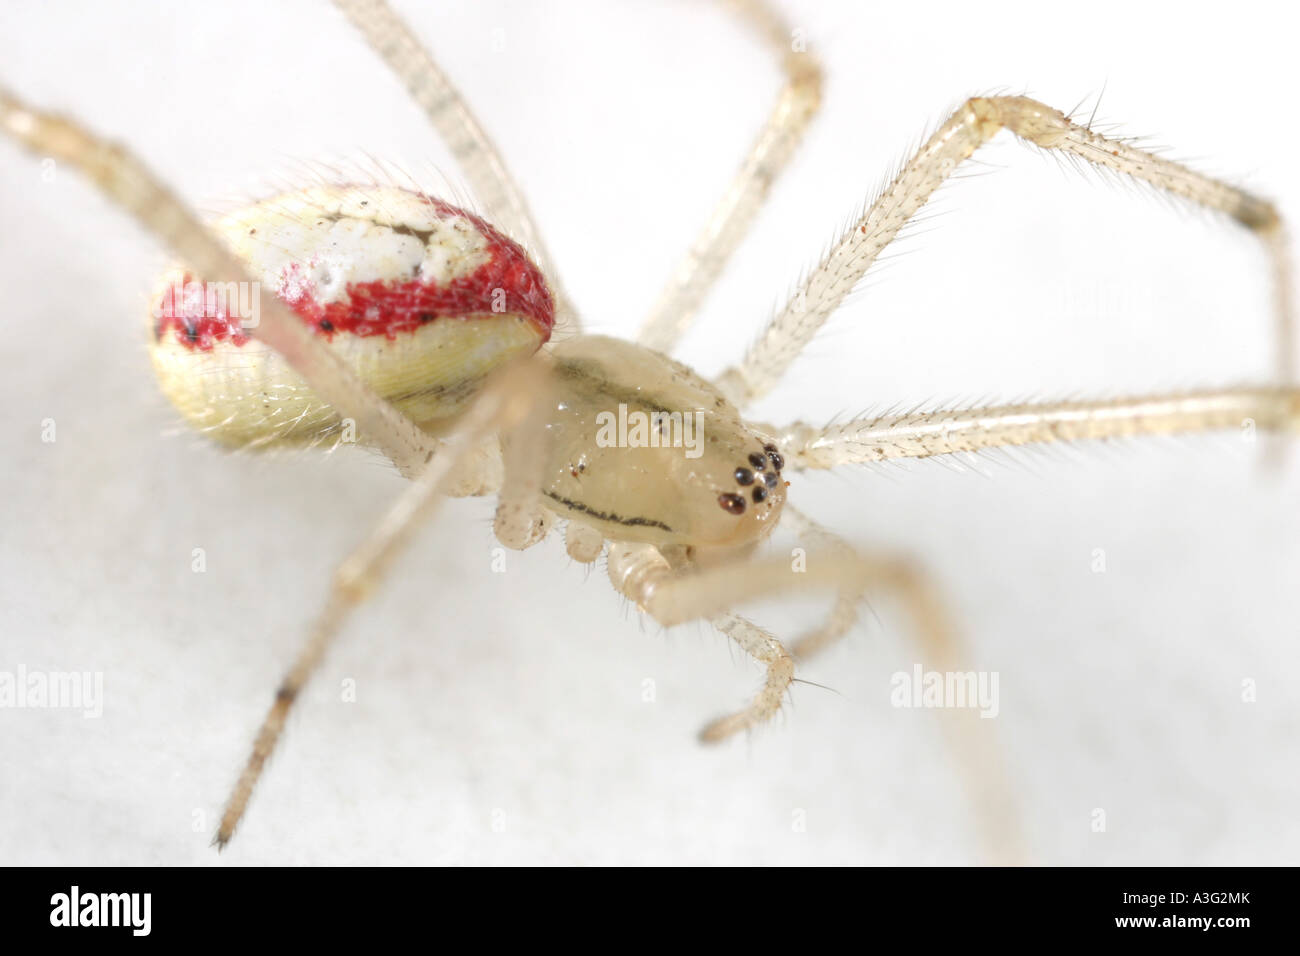 Enoplognatha ovata Spider, a cobweb weaver, on White Background Stock Photo